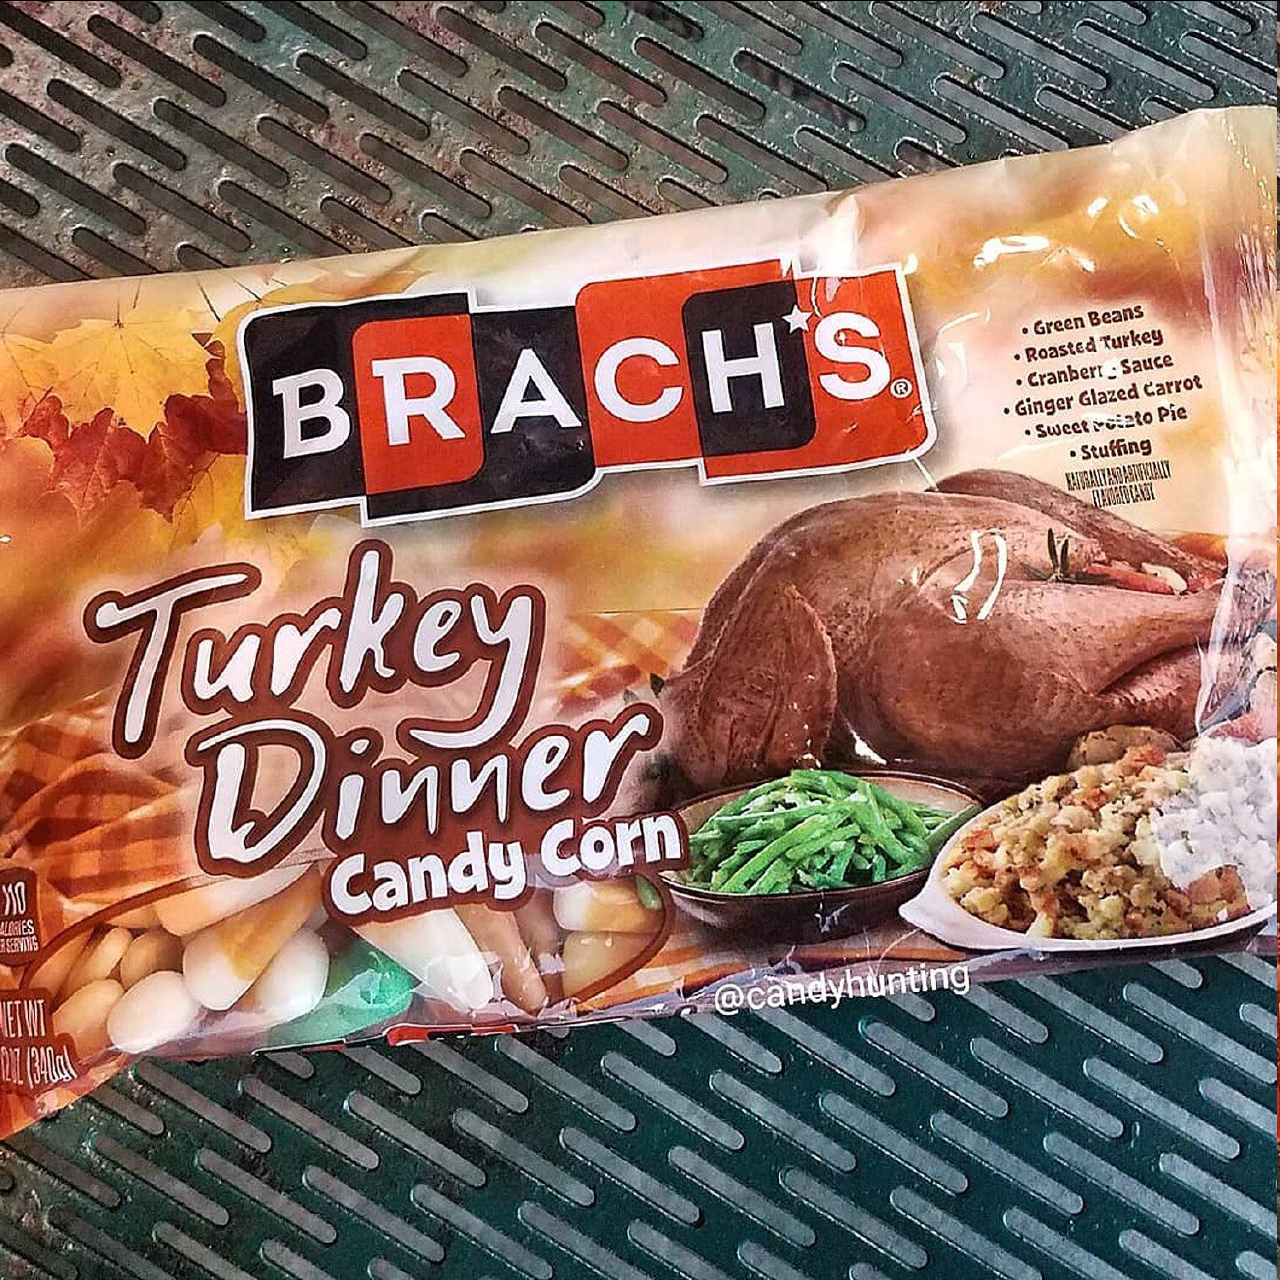 brach's turkey dinner candy corn - No Brach'S Green Beans Roasted key Cranbert Sale Ginger Glased Carrot Stelste Pie Stalling 720 Turkey Dinner Candy Corn